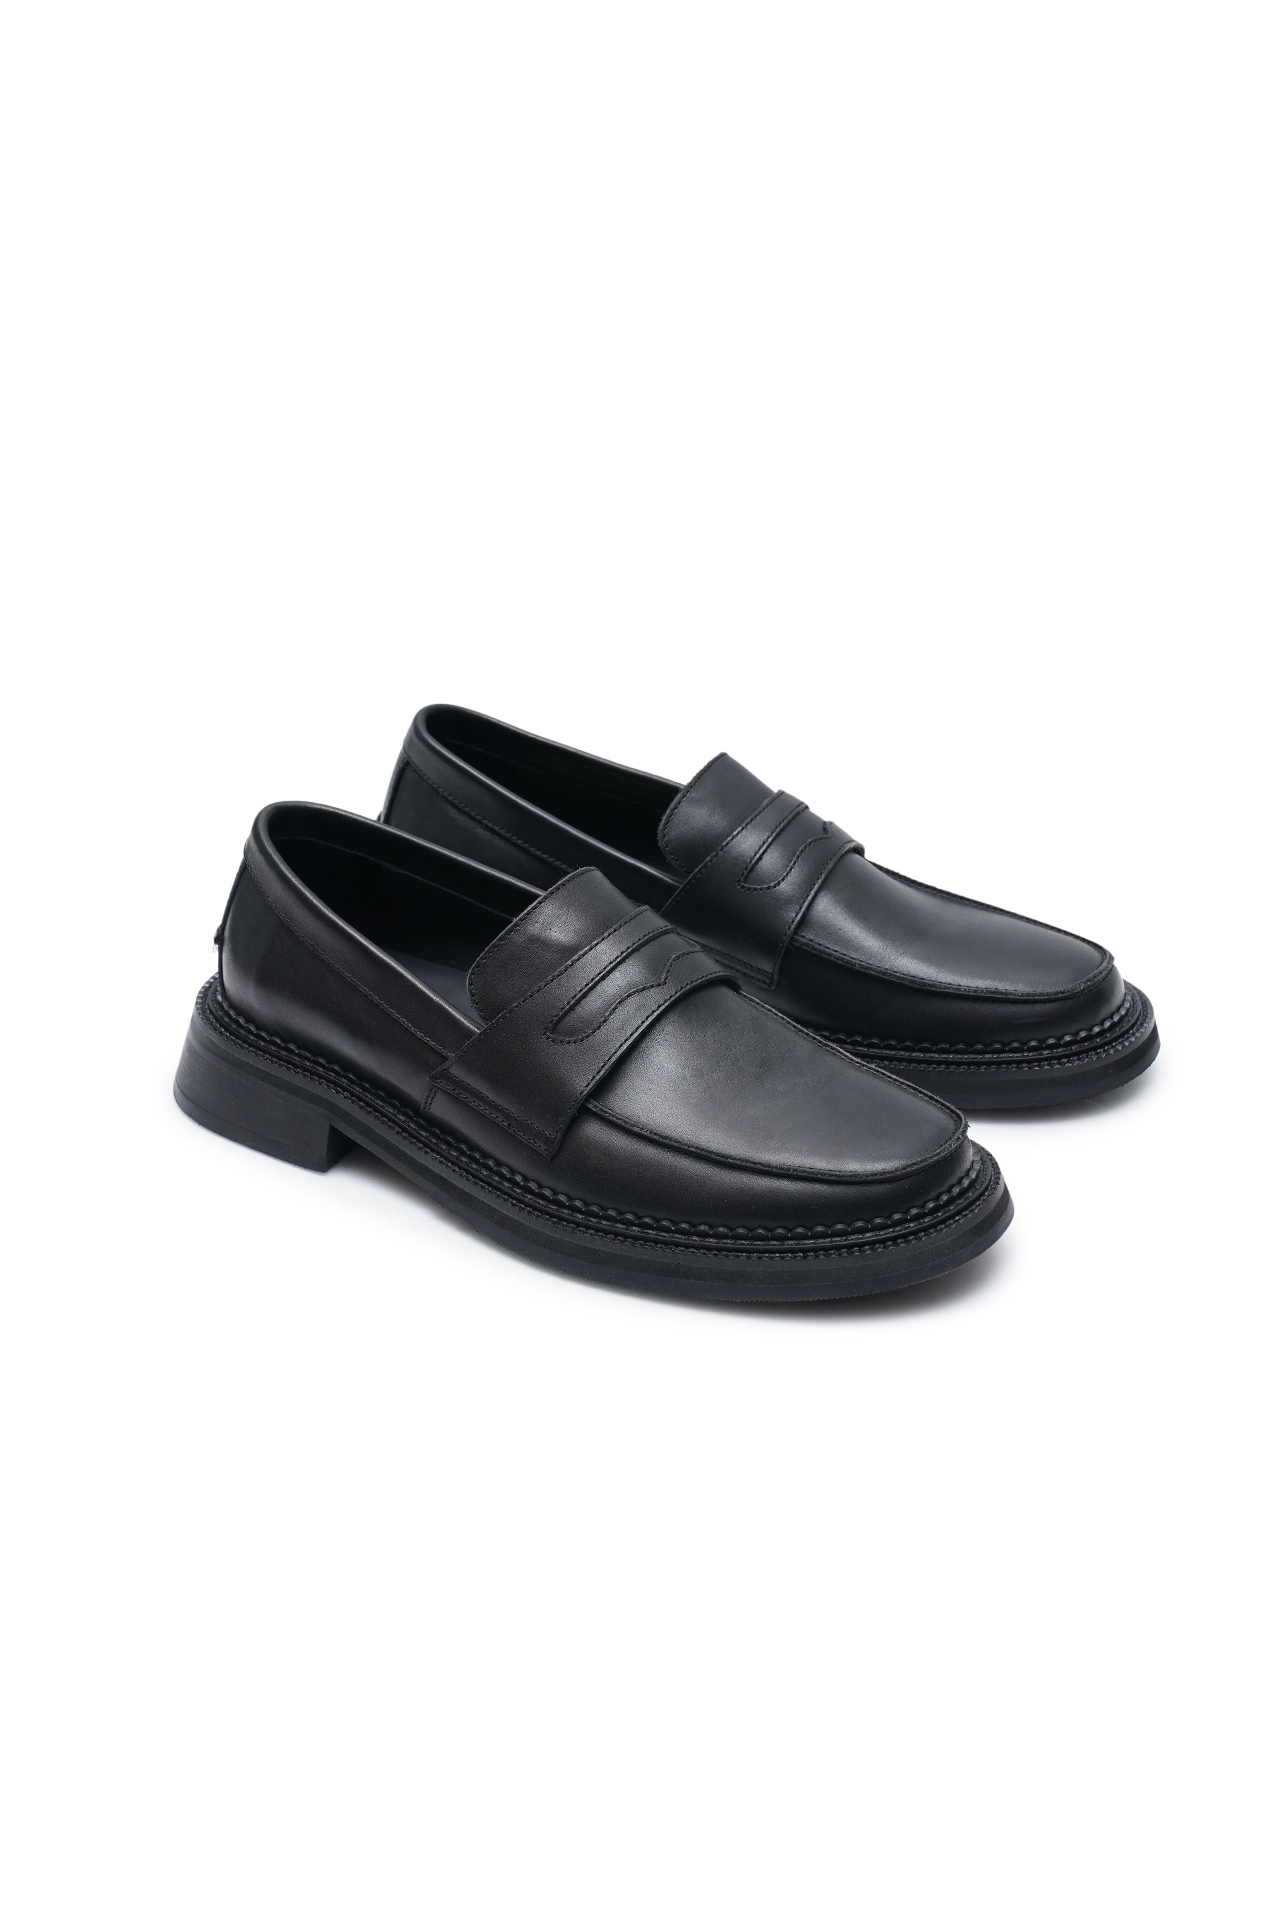 Leather Peny Loafers Black (12월 15일 순차 발송)